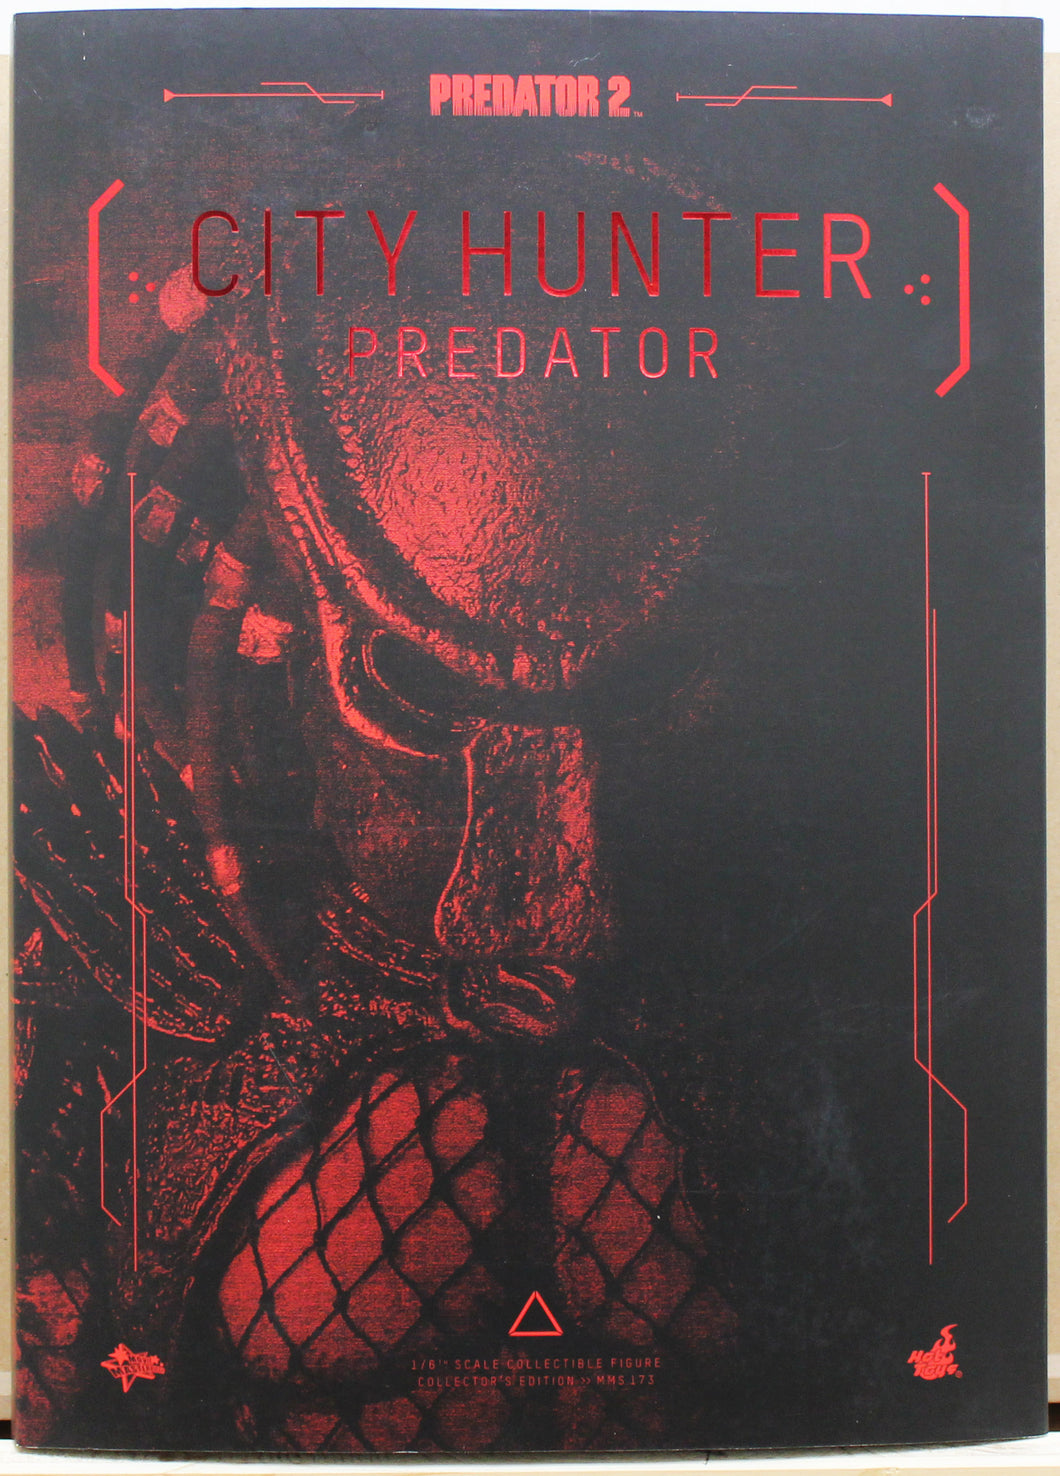 Hot Toys City Hunter Predator